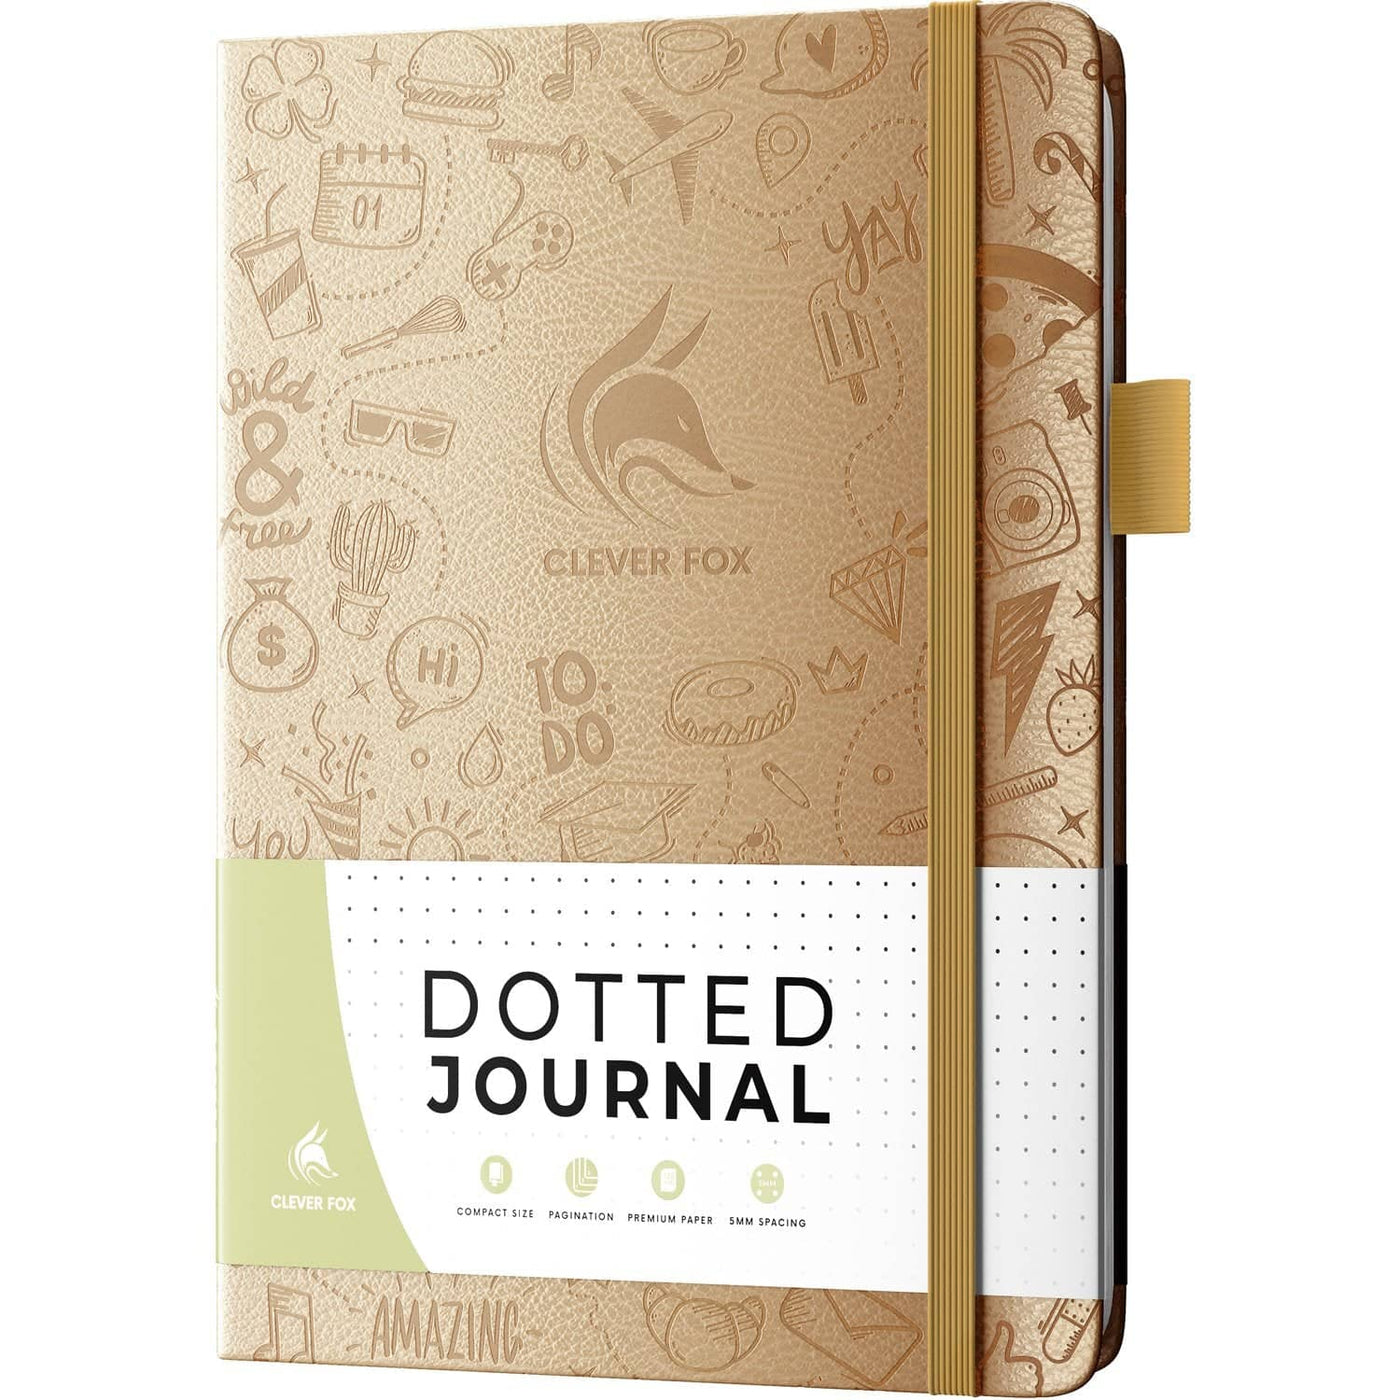 Virtual Dot Journal Kit, Grid magazine pärm 6 ringpärm, a249